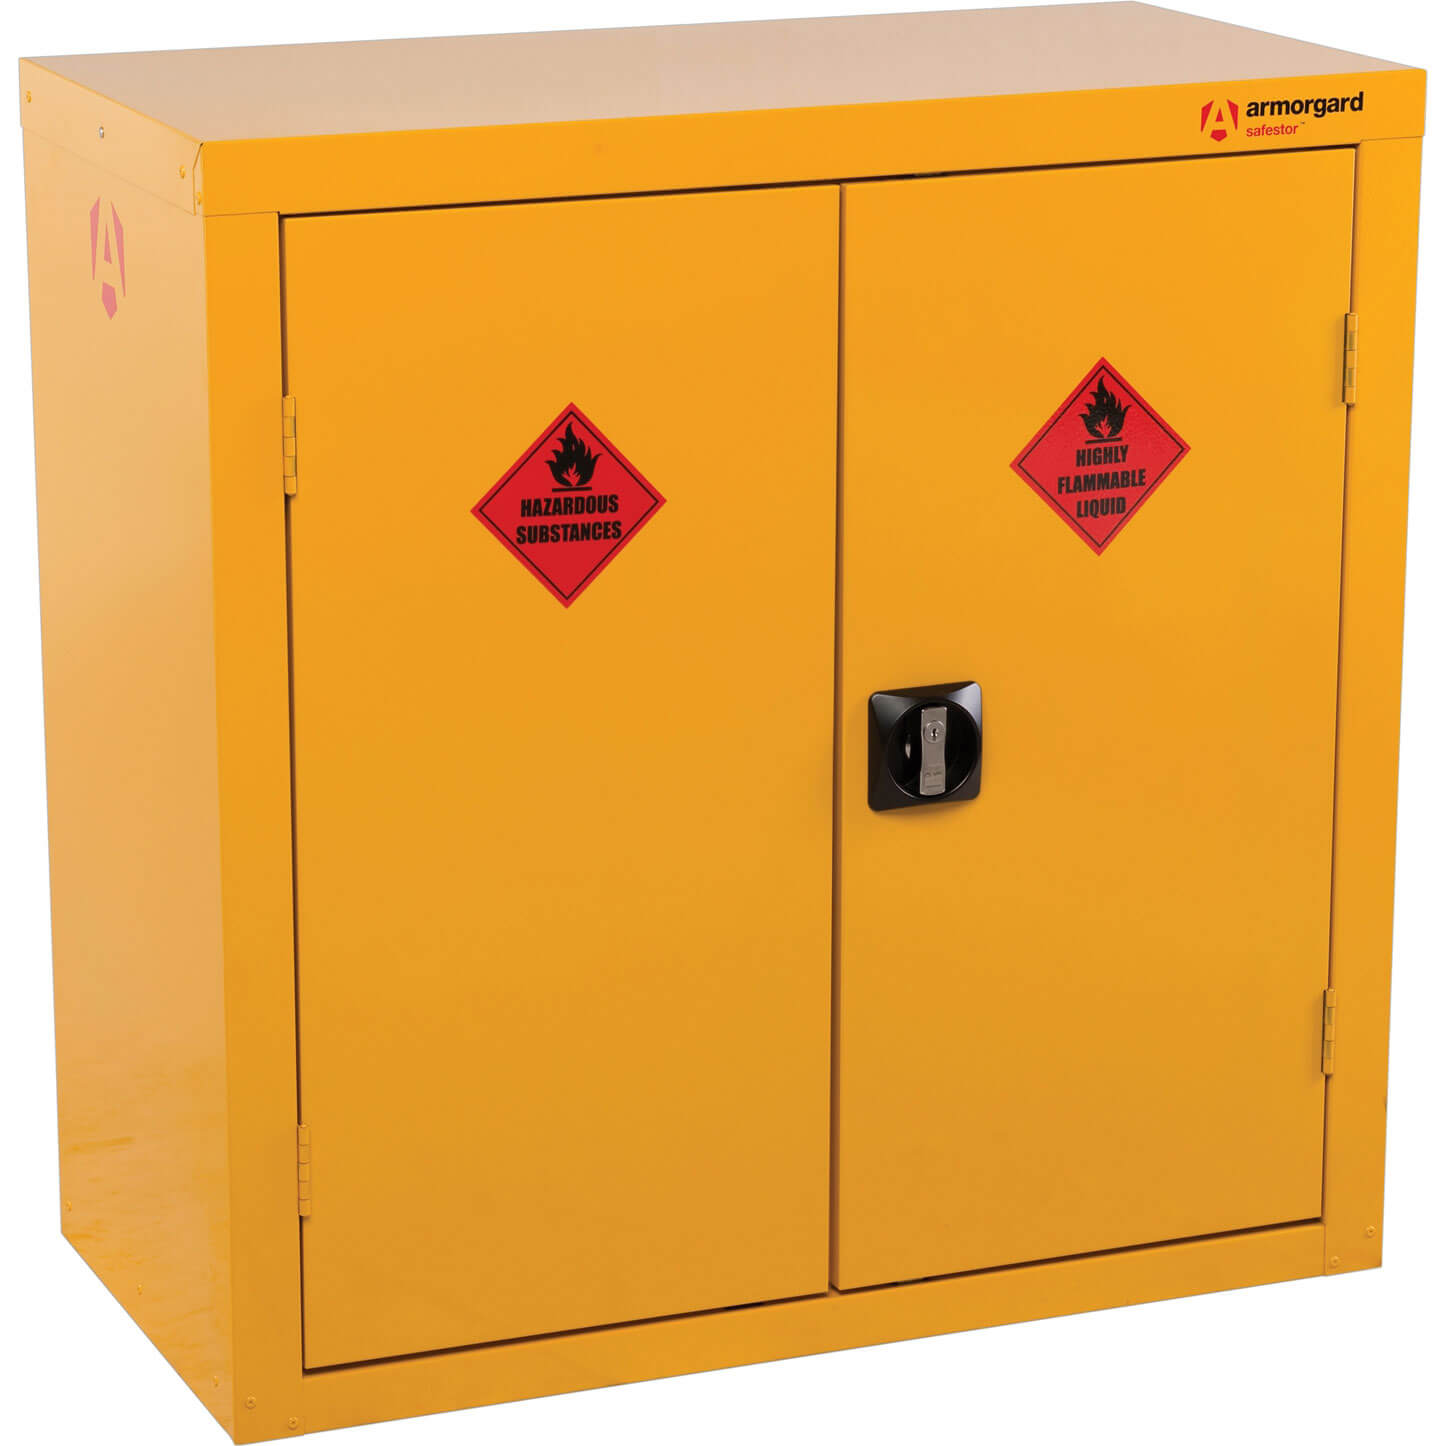 Image of Armorgard Safestor Hazardous Materials Secure Storage Cabinet 900mm 465mm 900mm